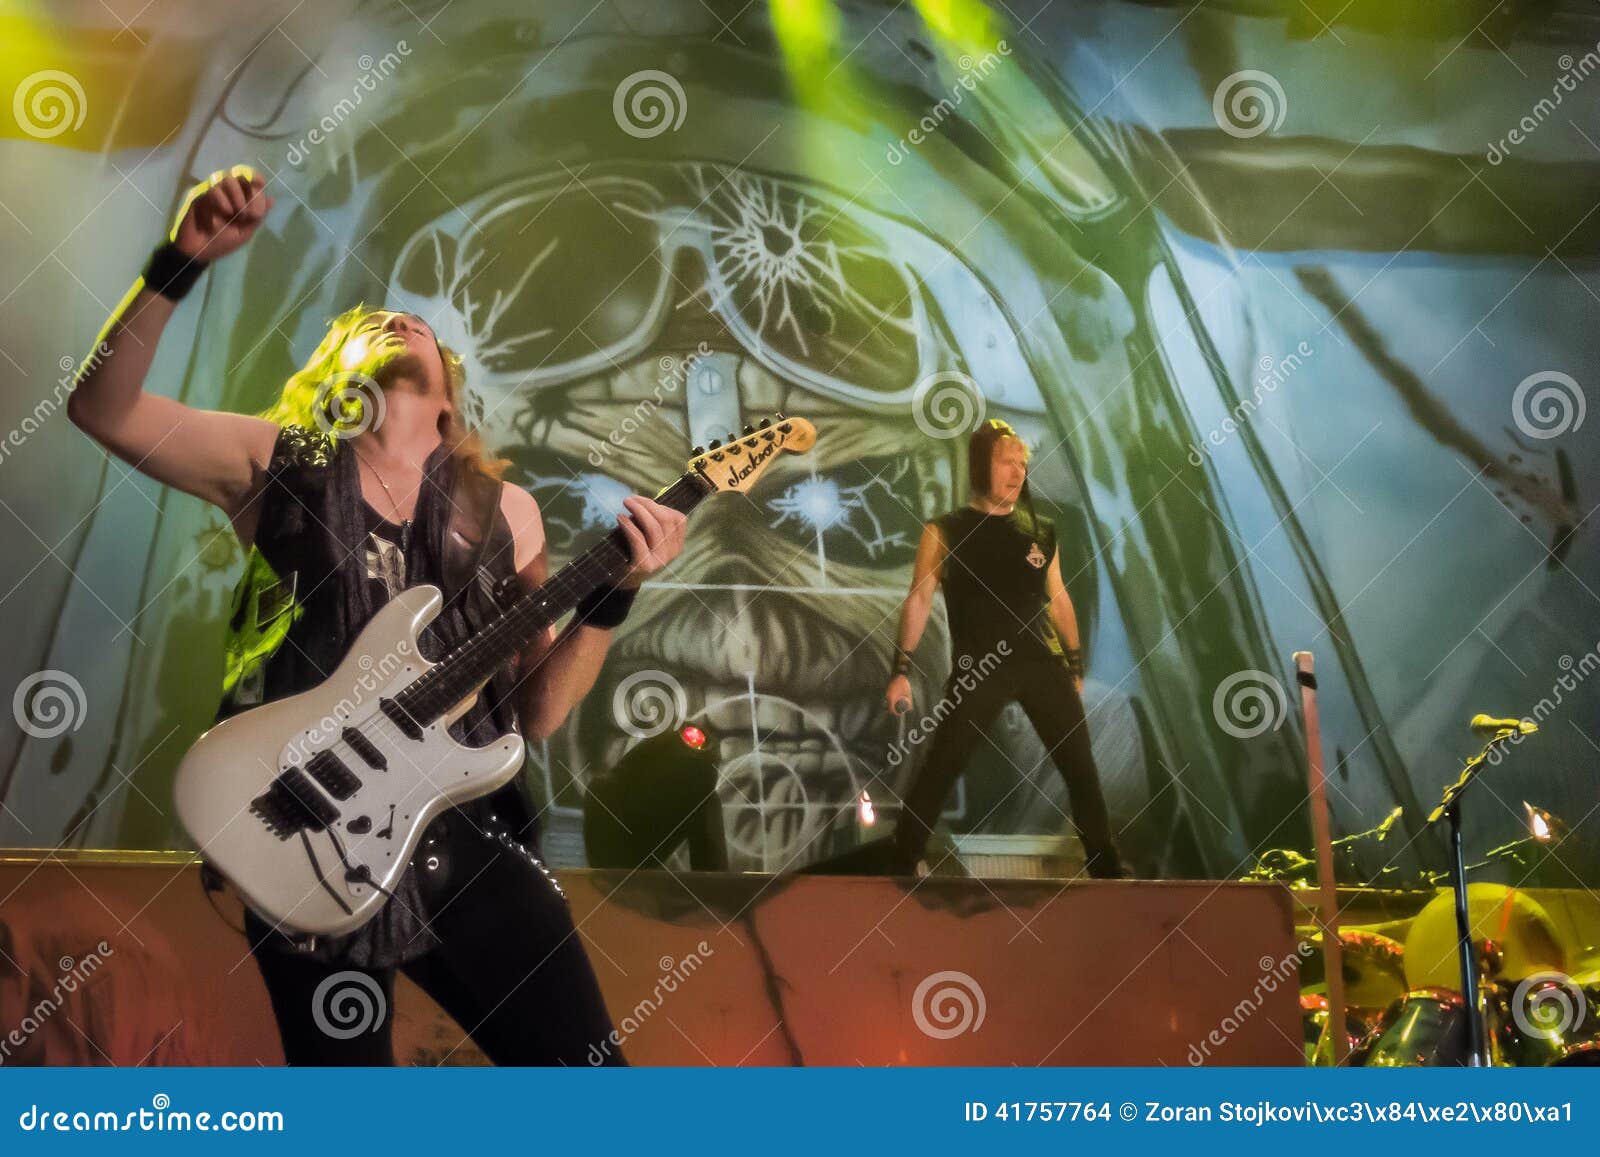 Iron Maiden 铁娘子乐队经典黑色壁纸-1523 - 摇滚壁纸网